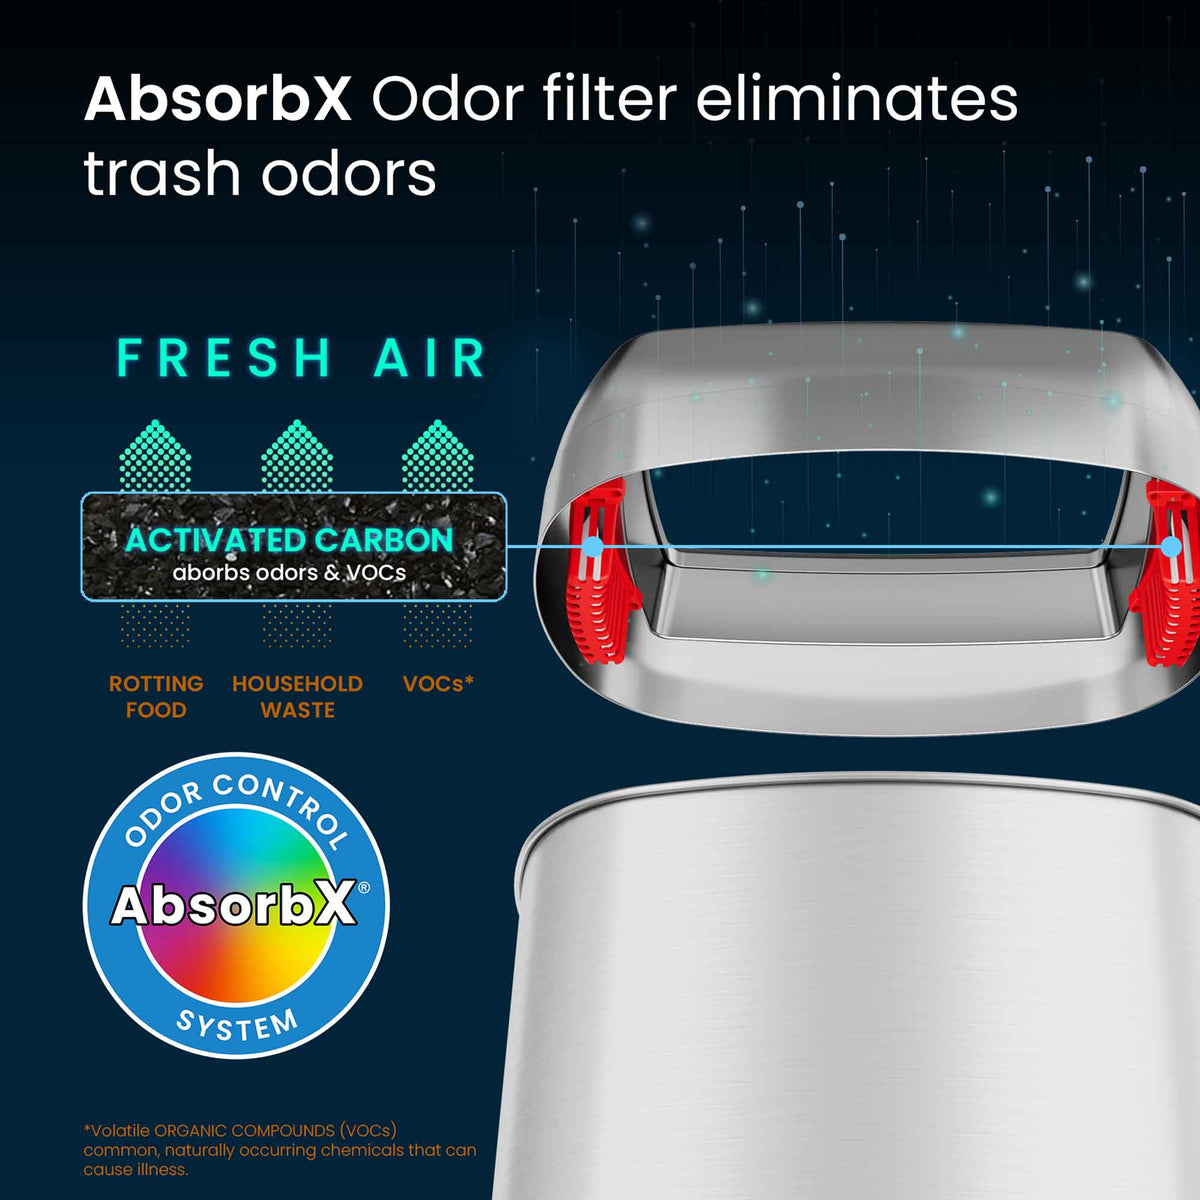 16 Gallon / 60 Liter Elliptical Open Top Trash Can with Wheels AbsorbX Odor Filter eliminates trash odors